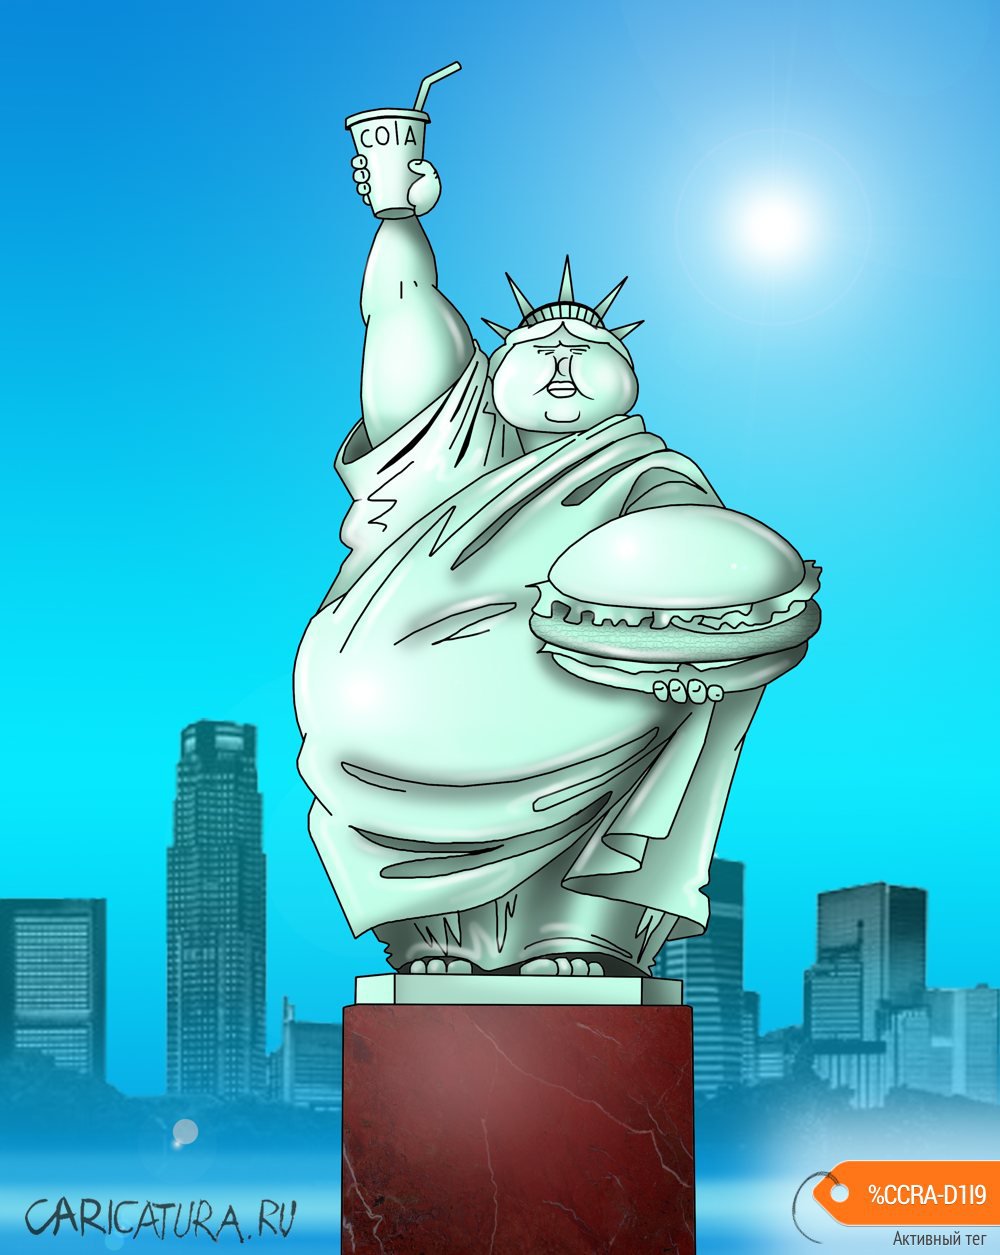 Карикатура "Американцы толстеют, но считают это нормой", Сергей Корсун